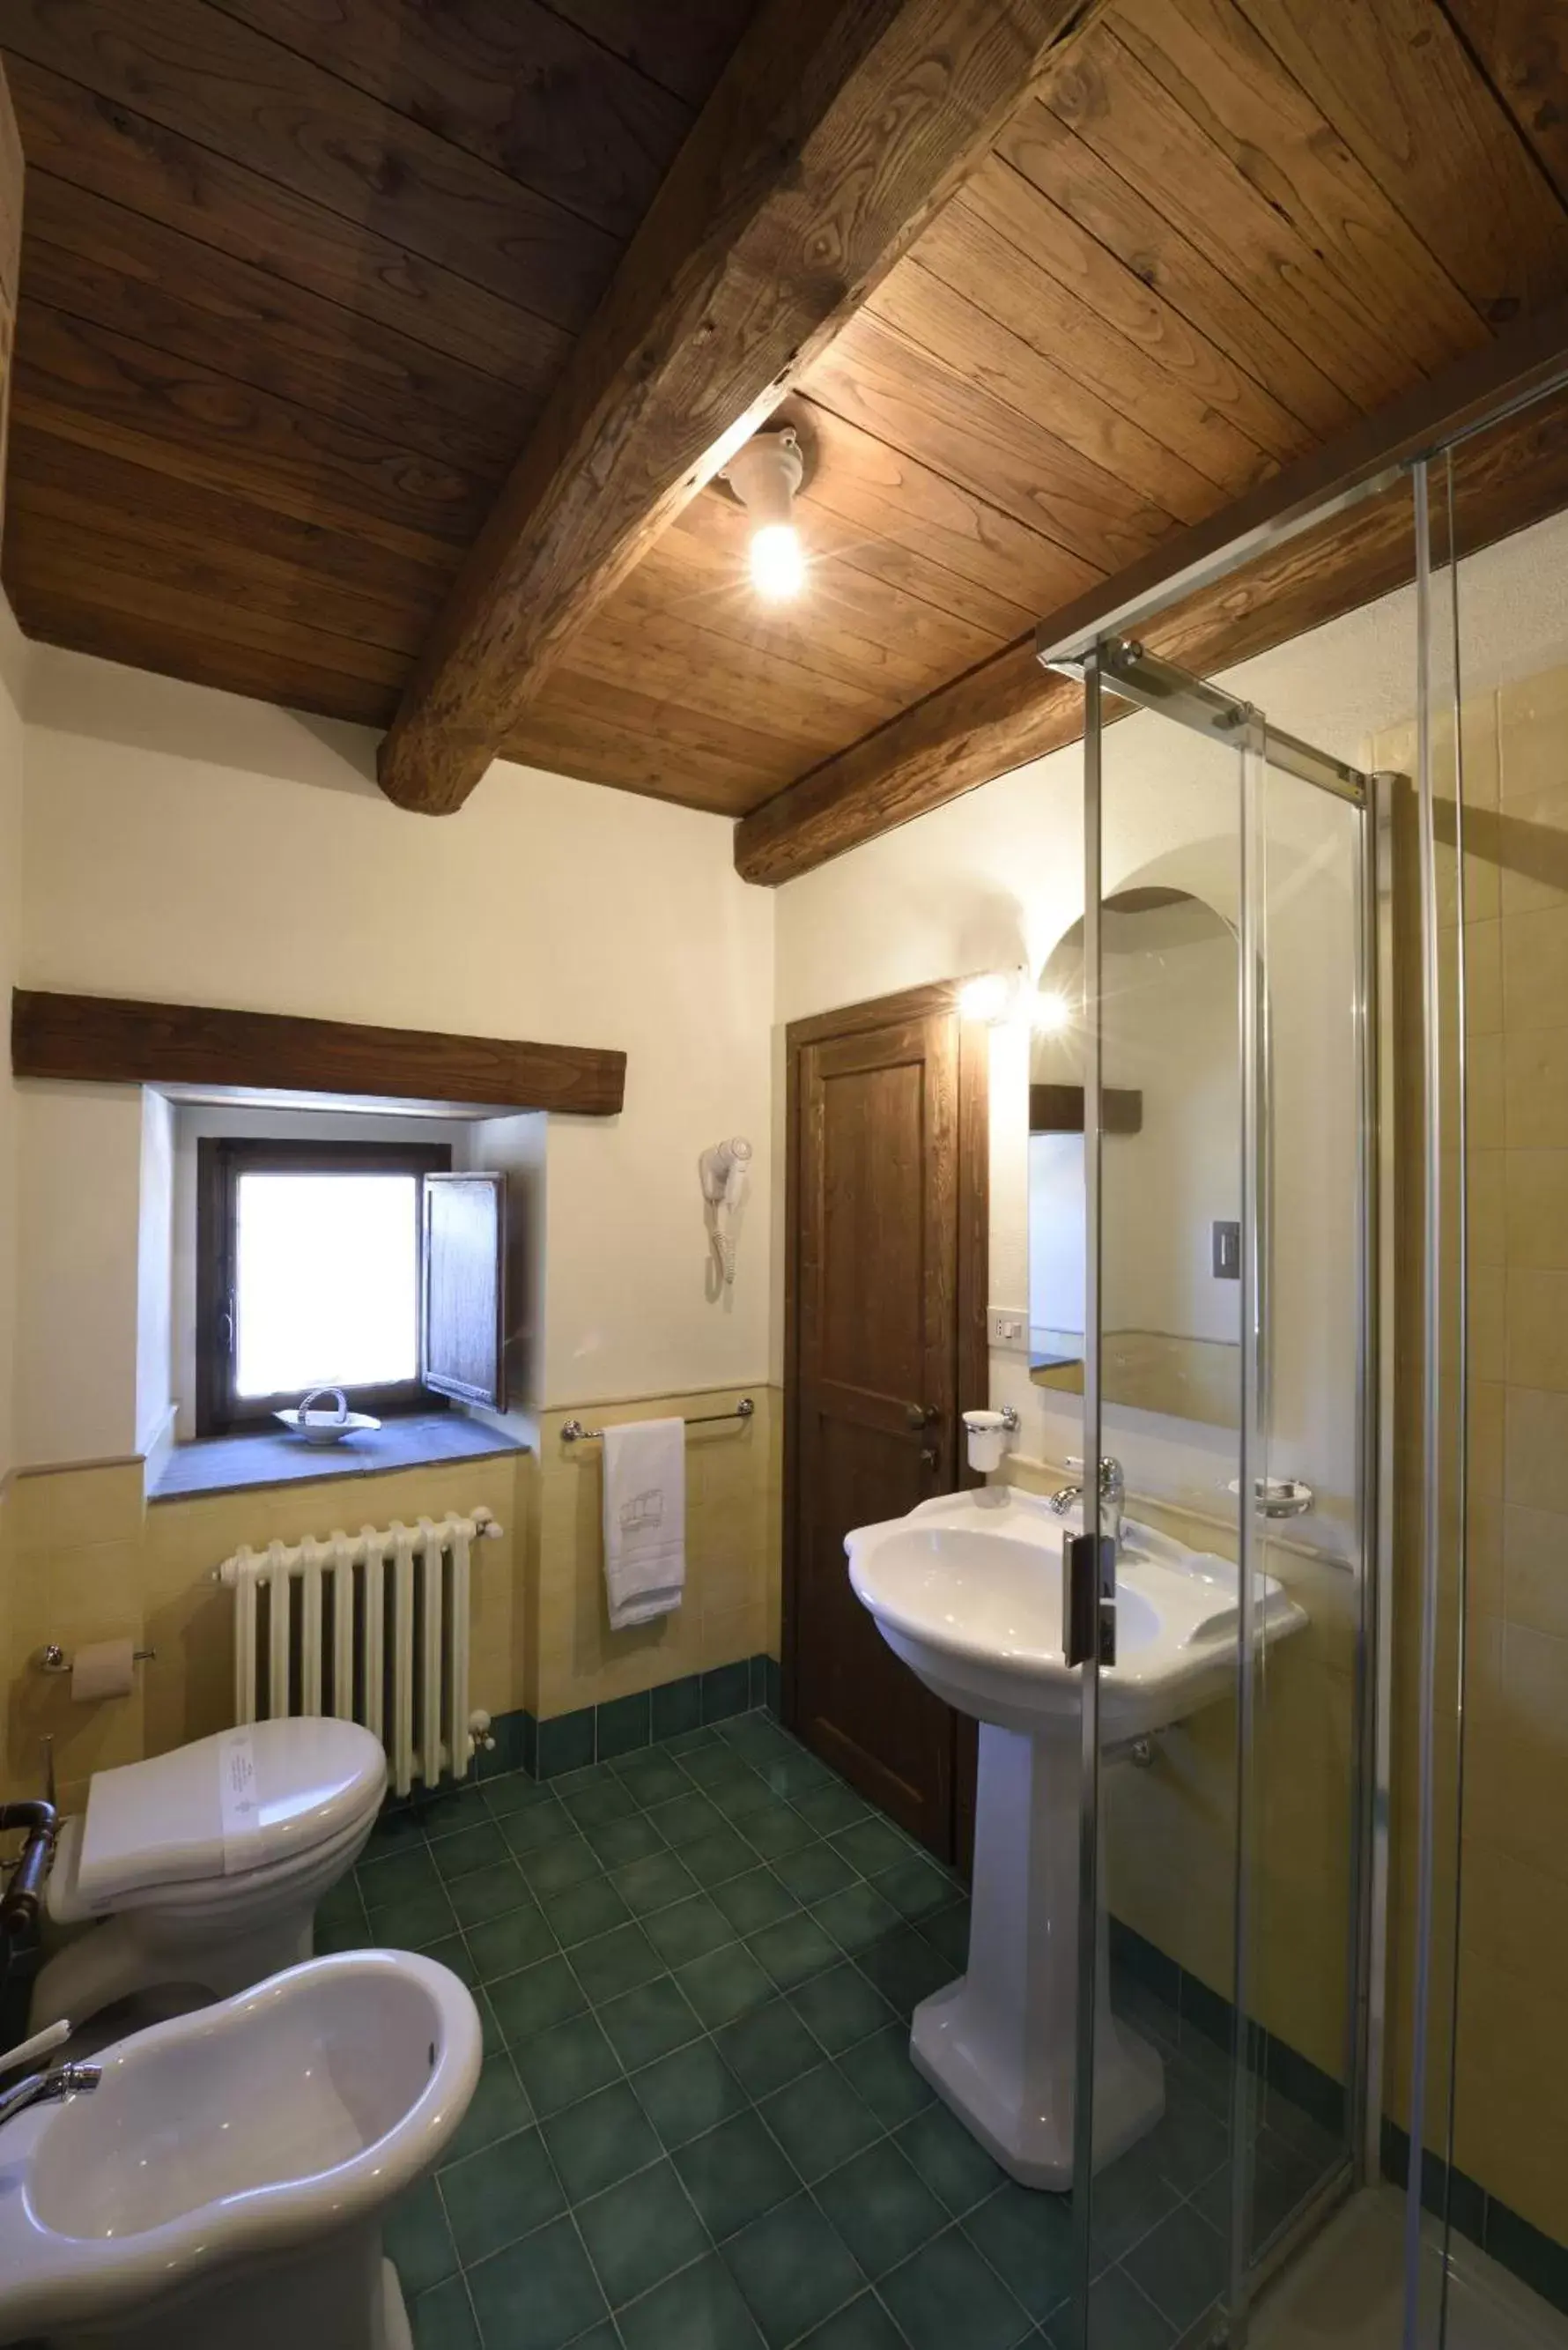 Bathroom in Borgotufi Albergo Diffuso